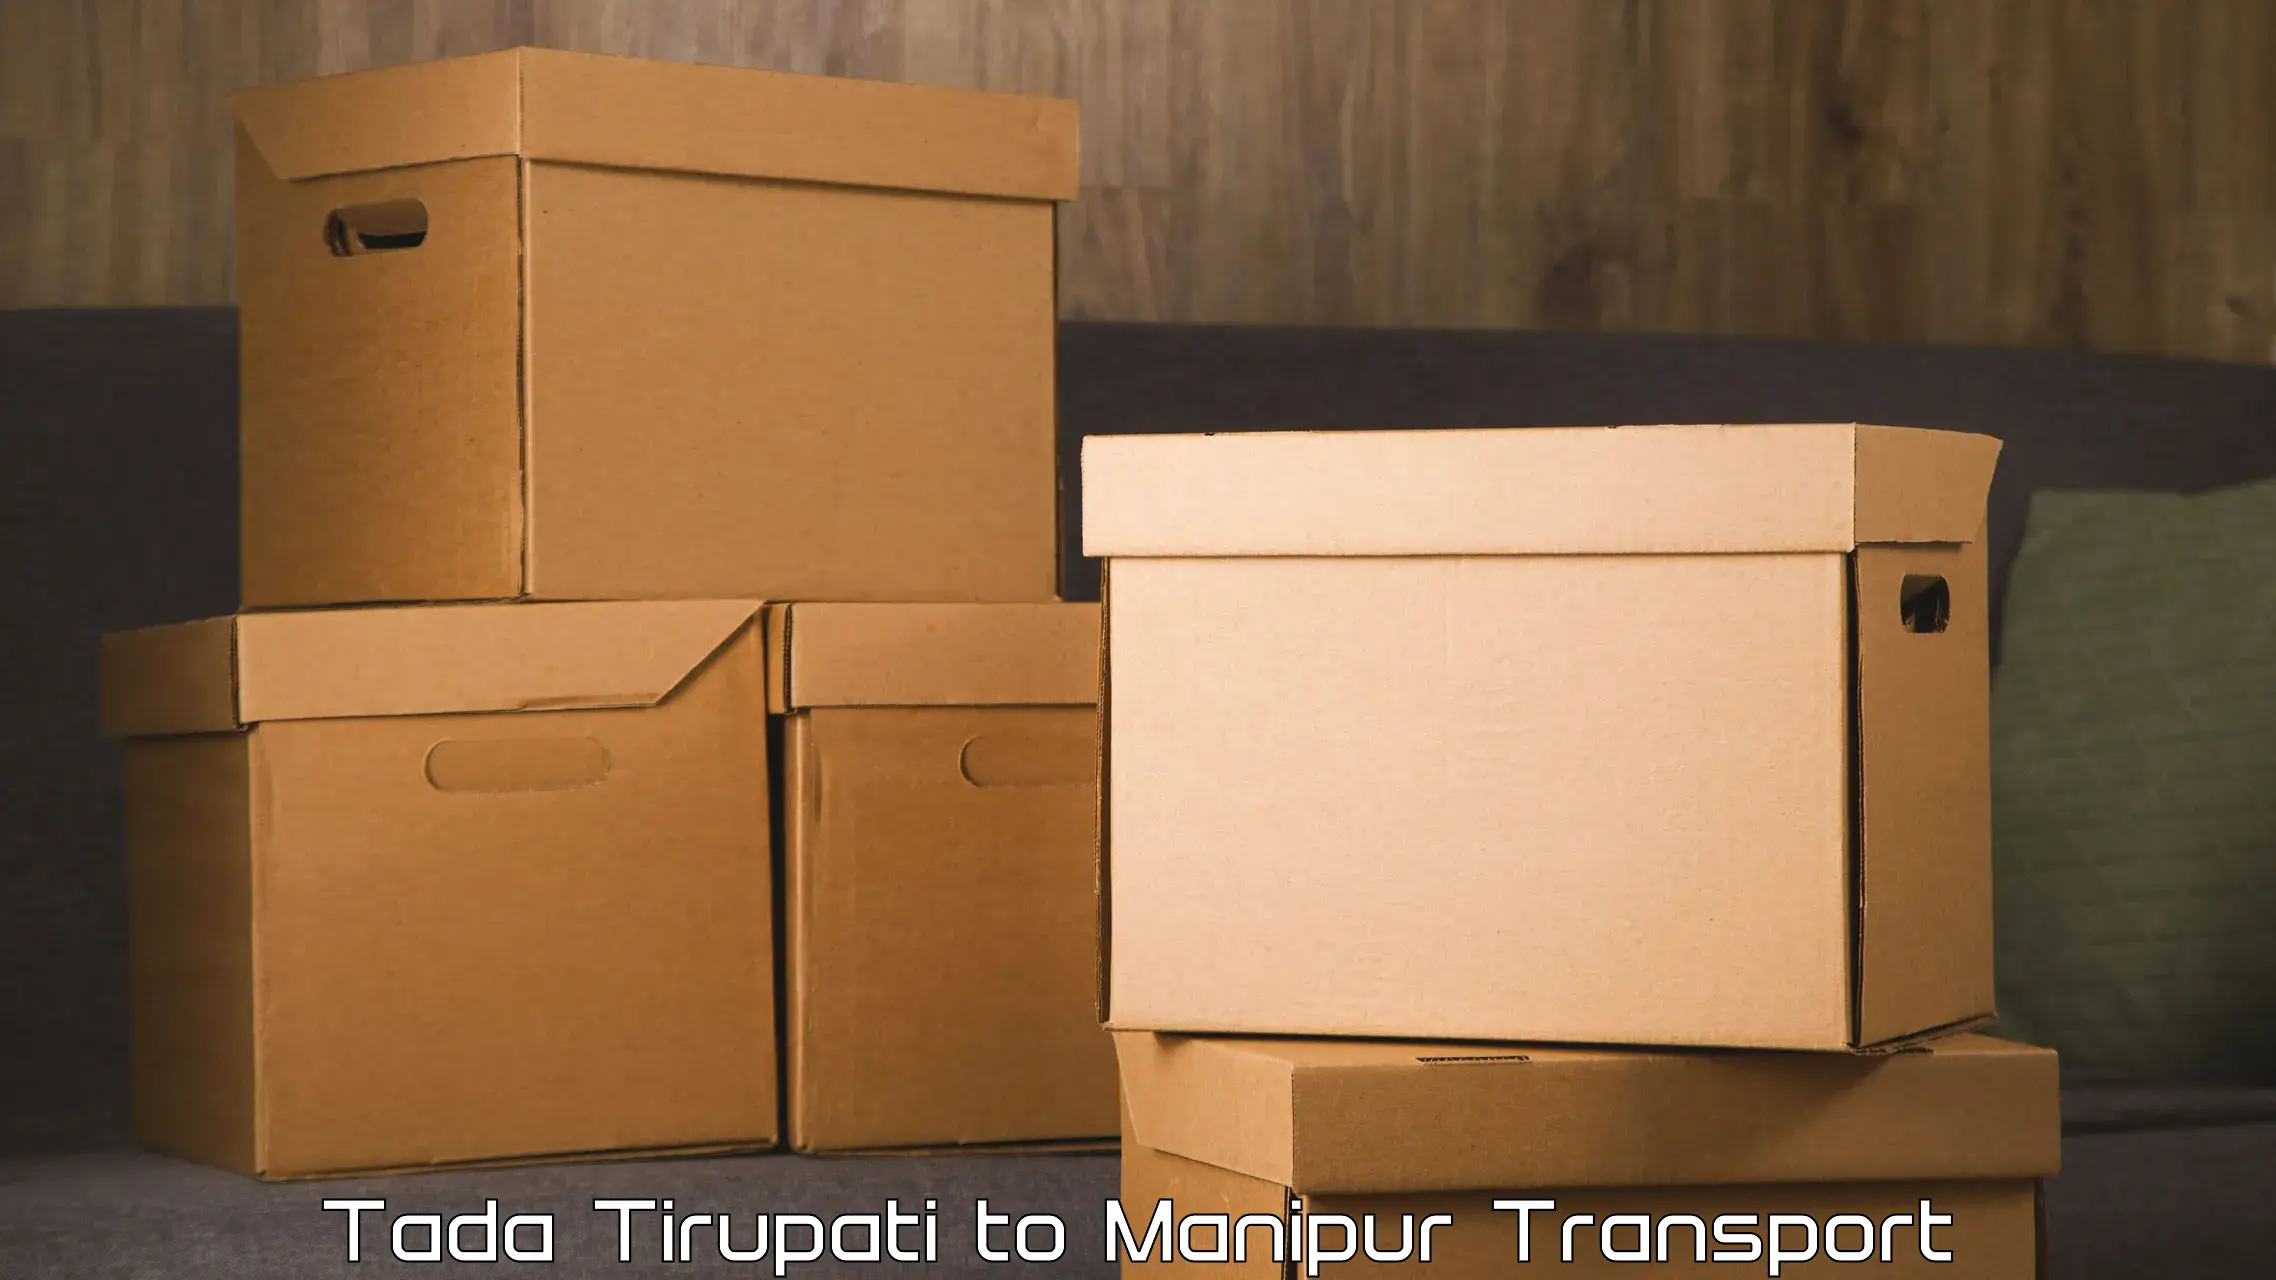 Cycle transportation service Tada Tirupati to Manipur